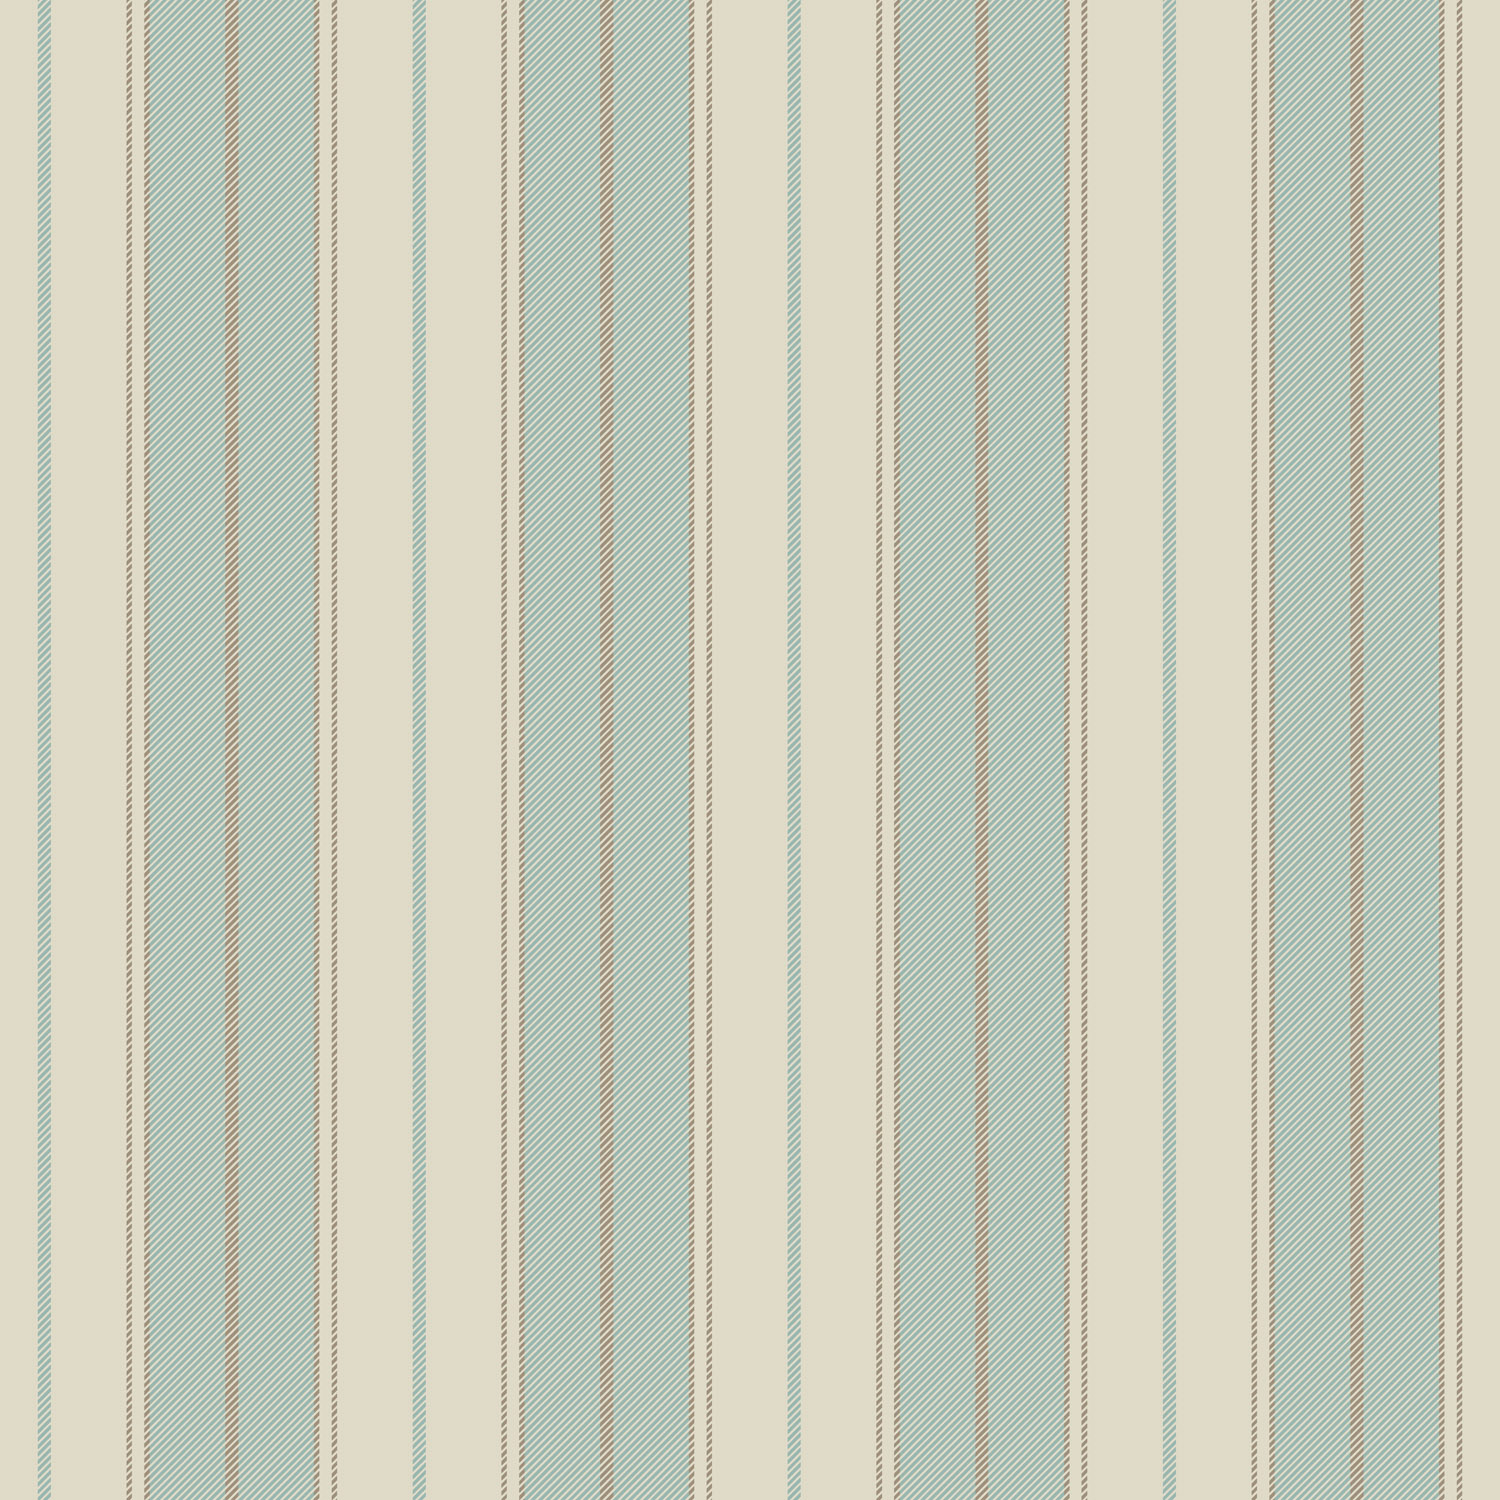 Vintage Striped Background Seamless Wallpaper